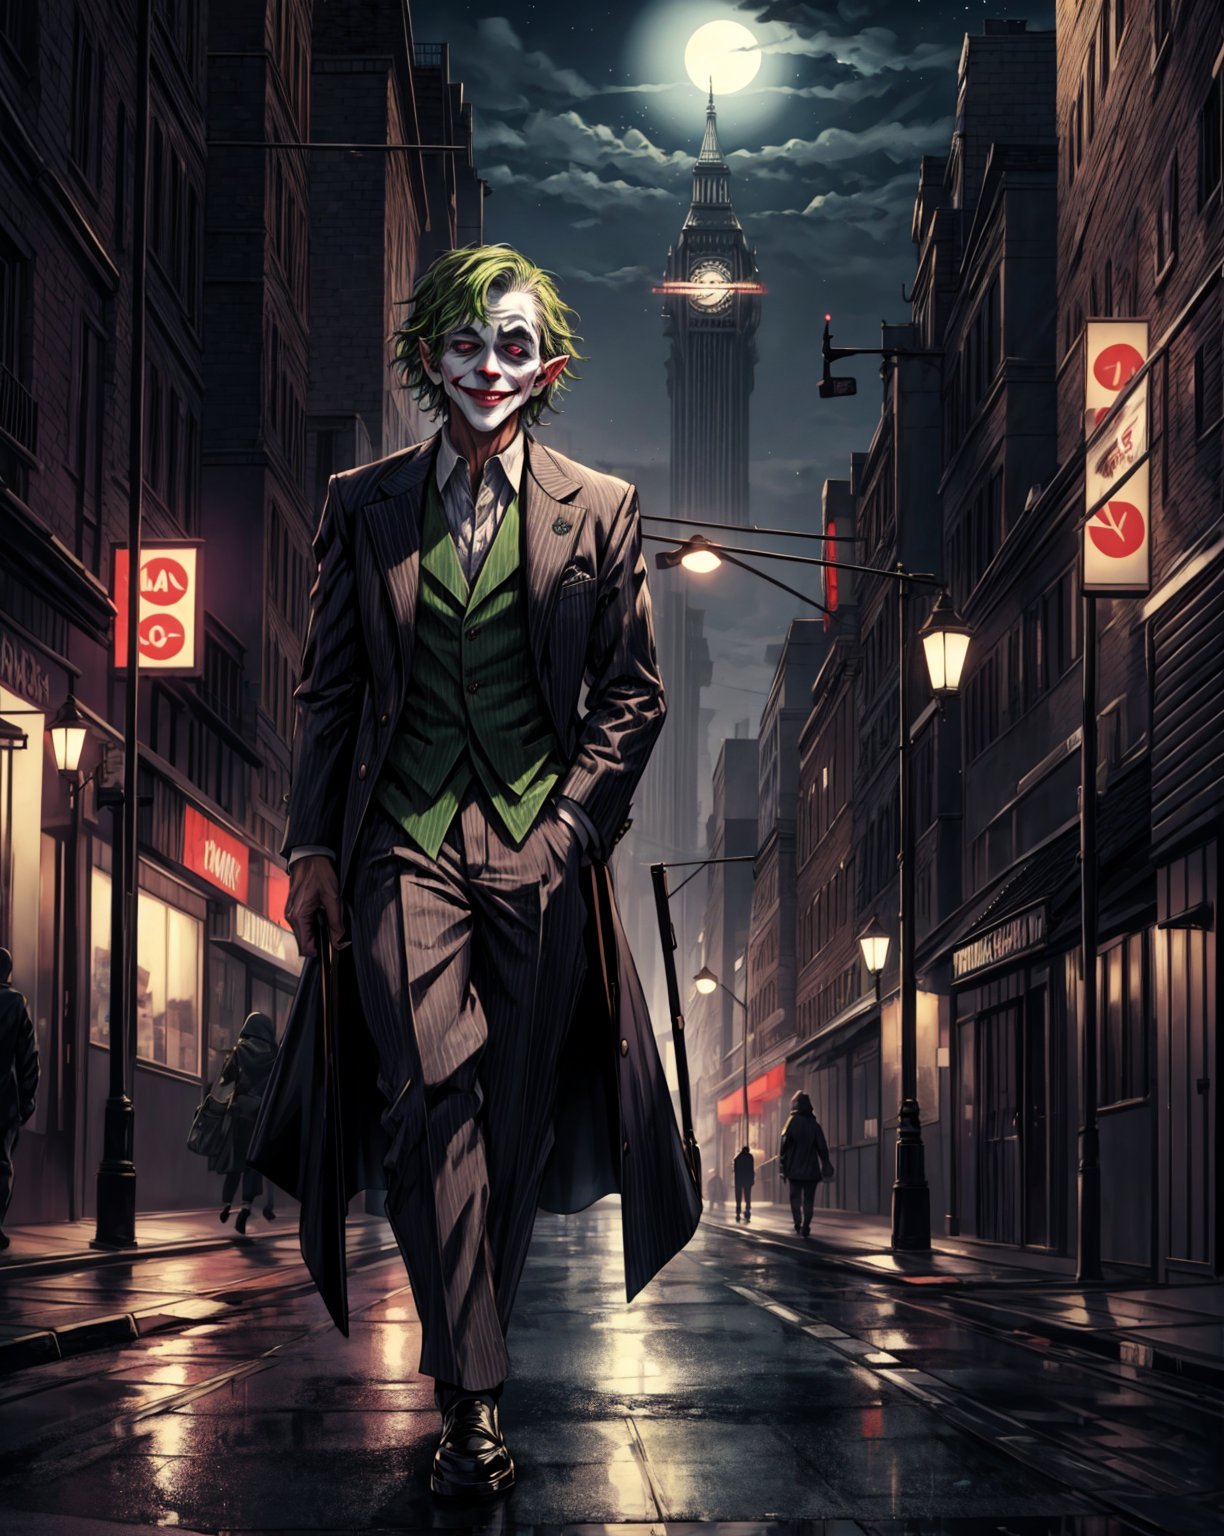 Best Quality, Masterpiece, Ultra High Resolution, Detailed Background, Joker Yoda, smile, walking, street background, night, dynamic view, 4k Best Quality